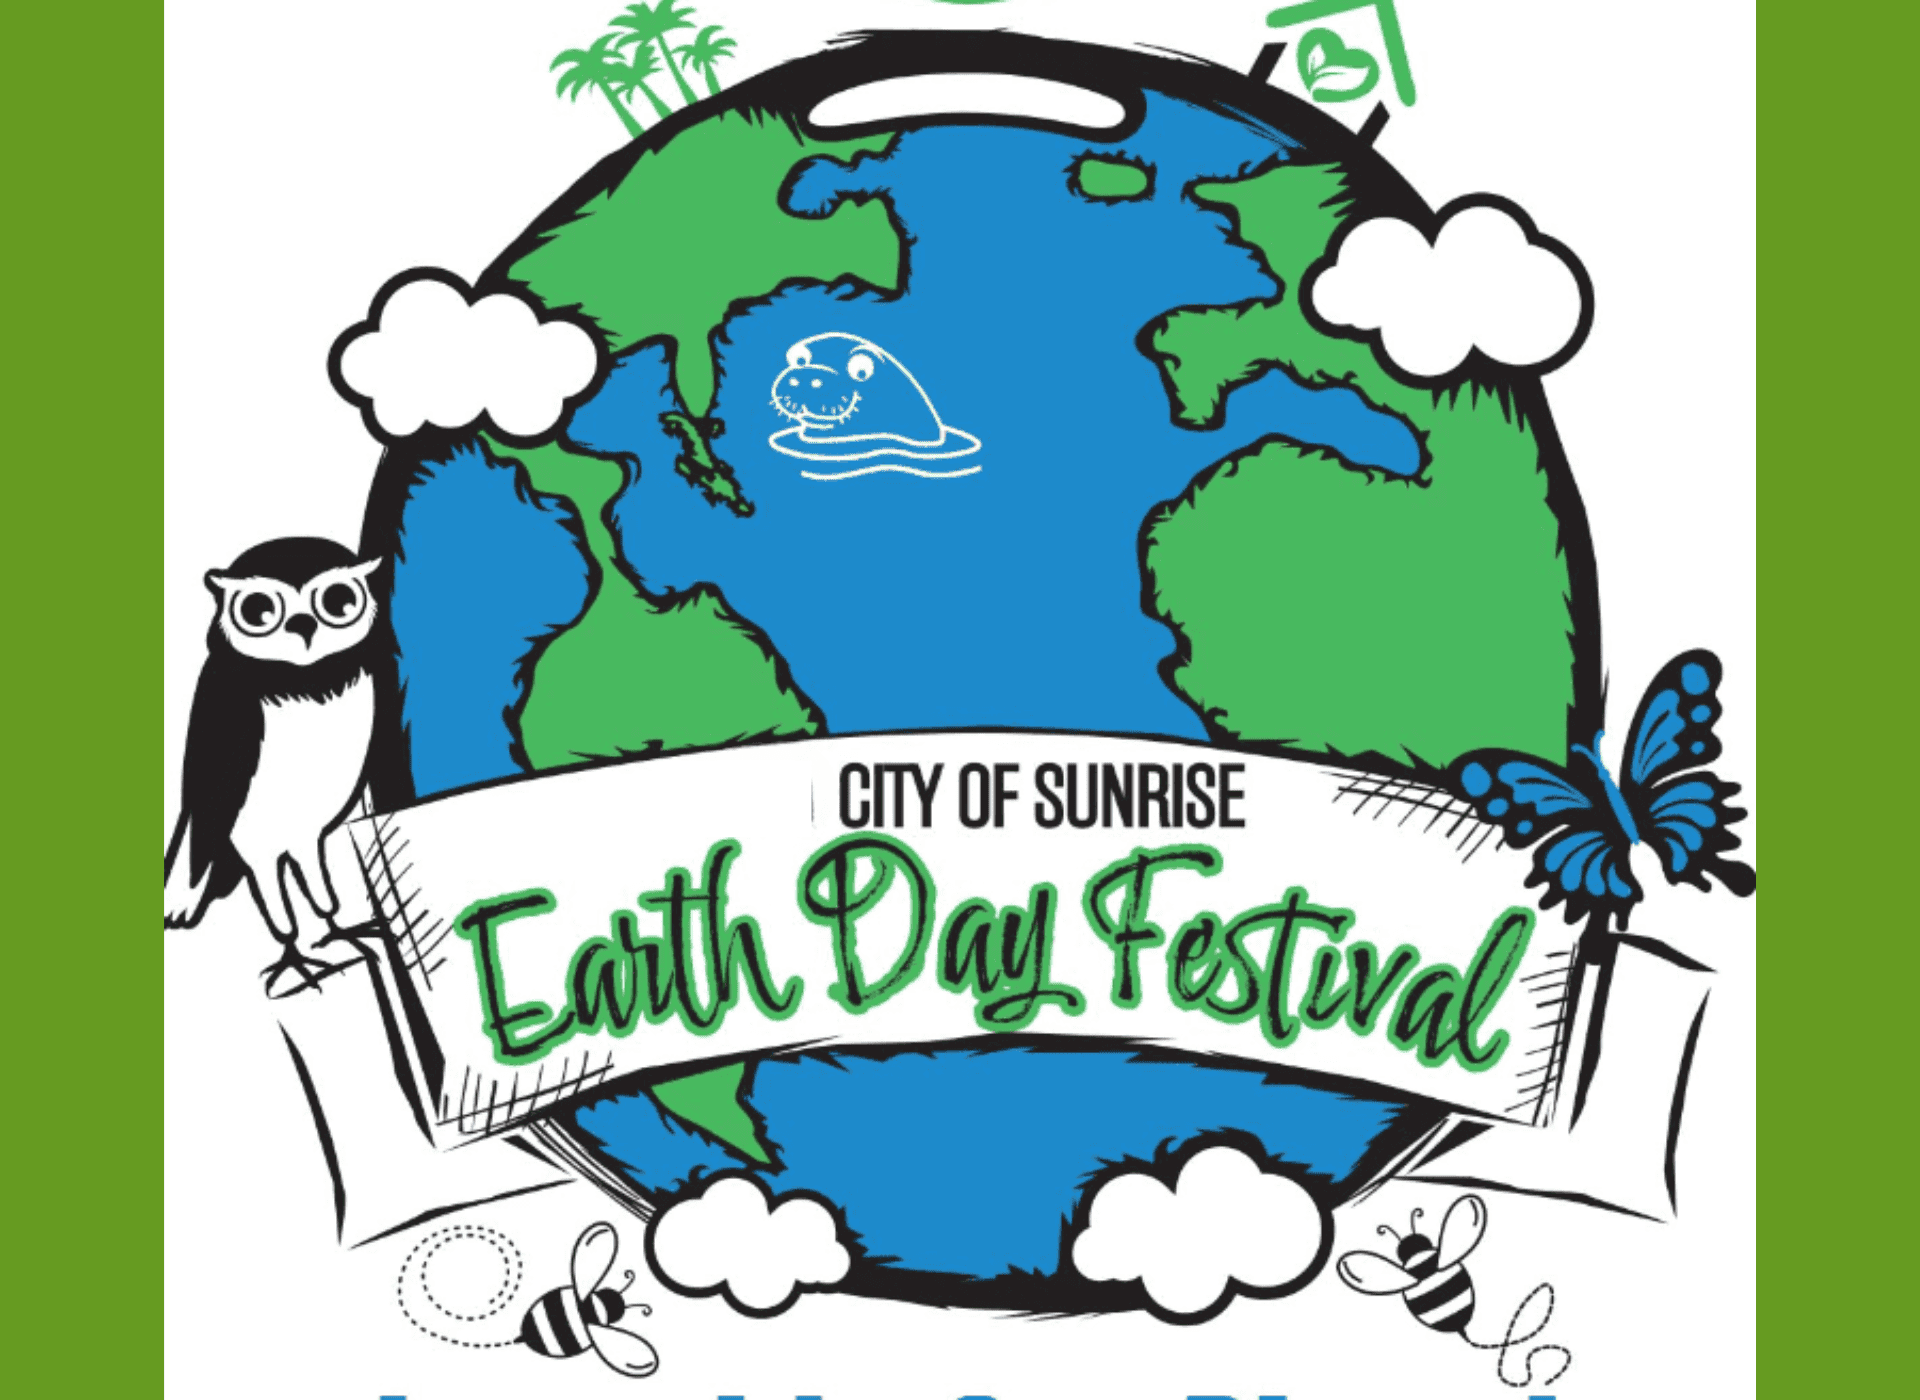 City of Sunrise Earth Festival